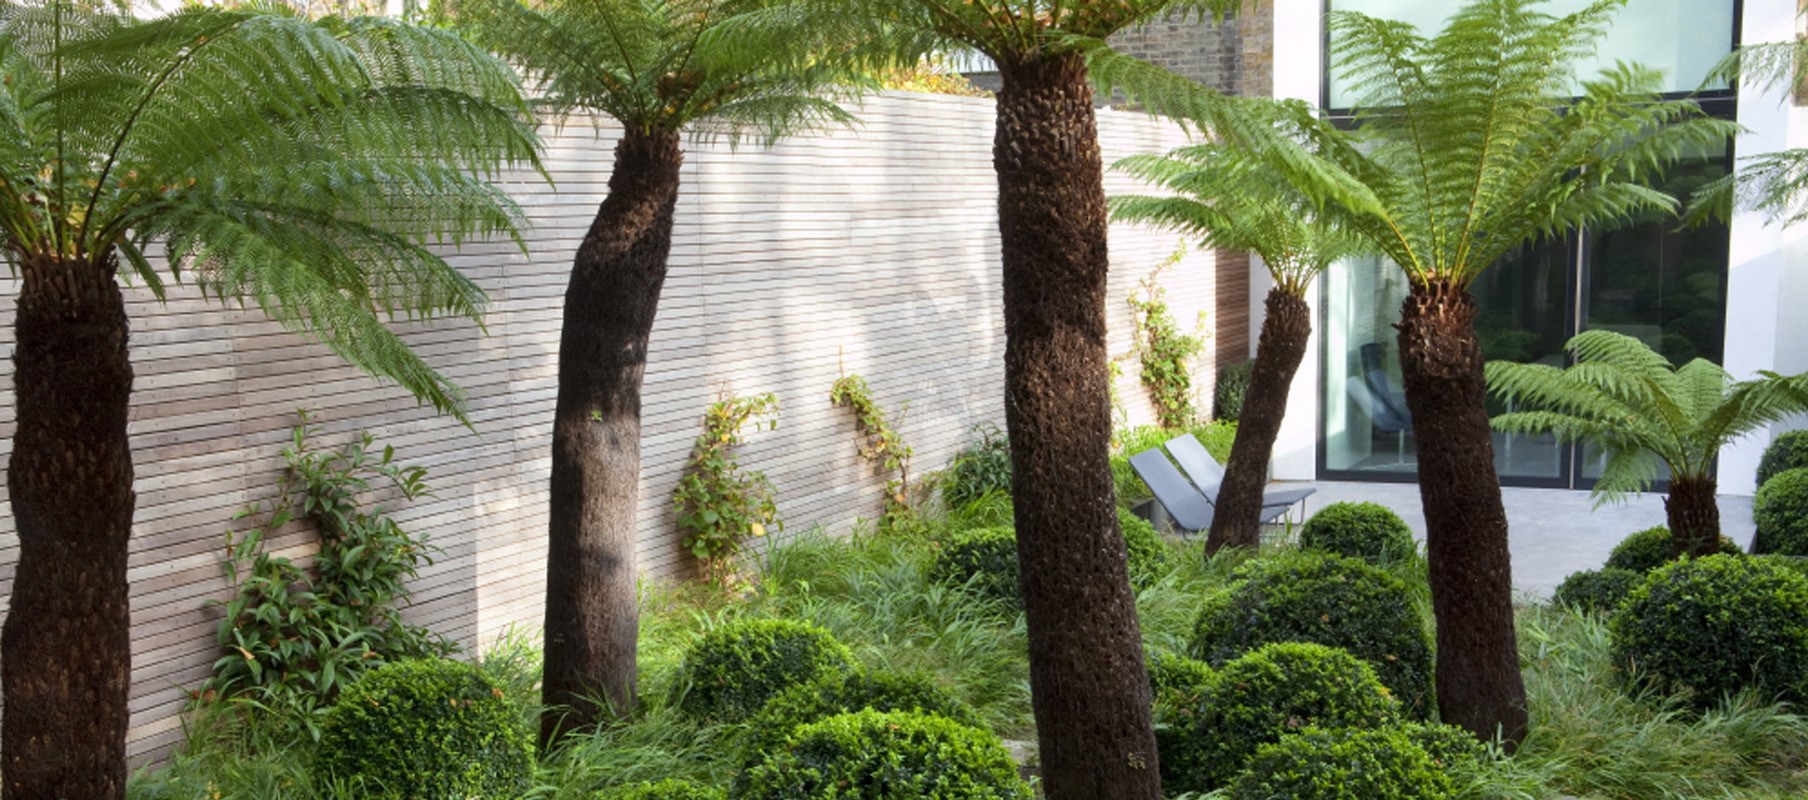 Tom Stuart-Smith Garden with Palm Trees